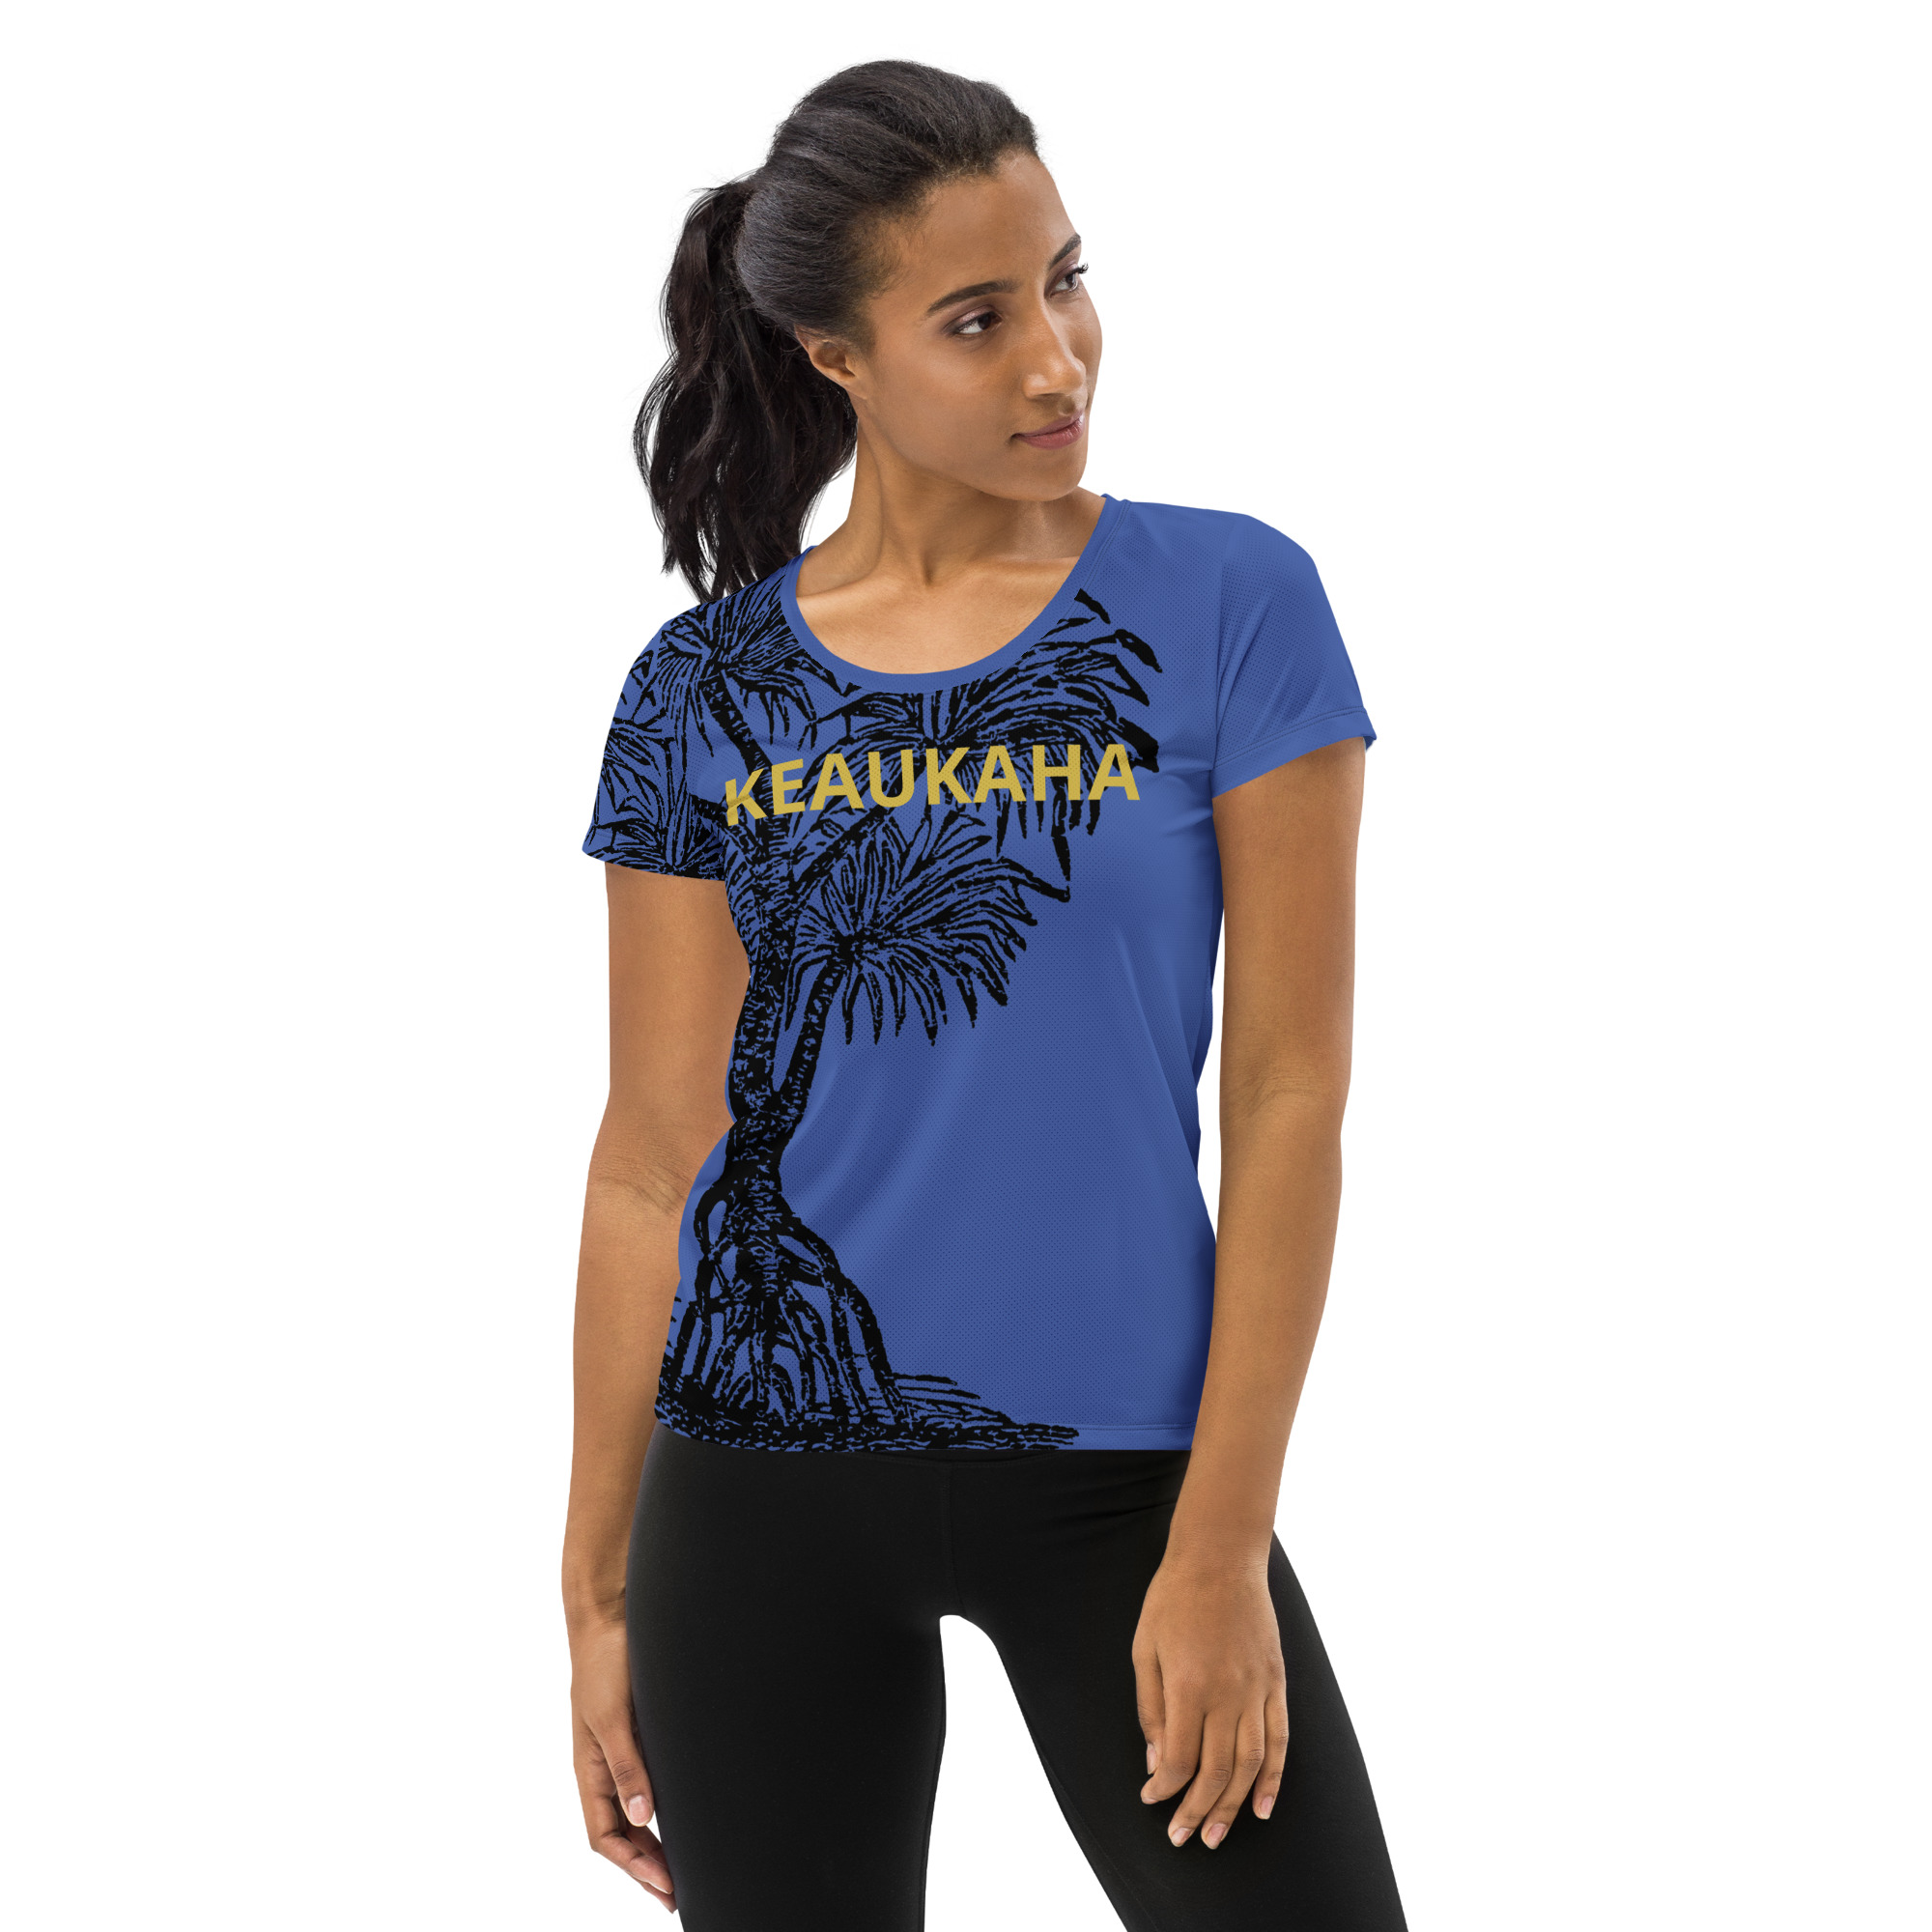 2023 Women's Athletic T-shirt – Keaukaha – Hilo Hawaii Paddling Club the Big Island